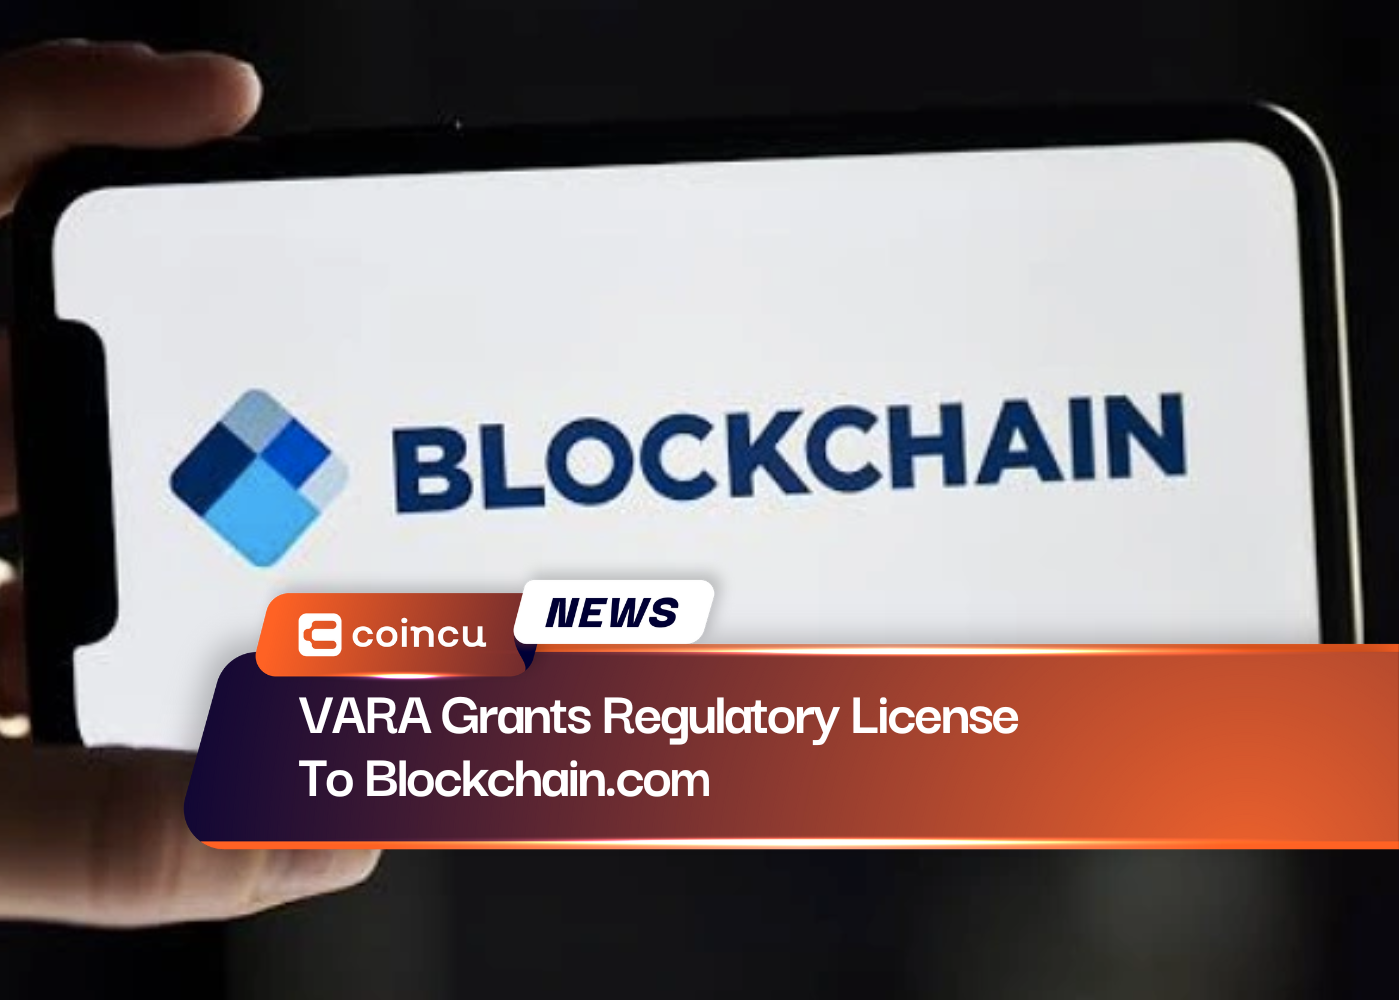 VARA Grants Regulatory License To Blockchain.com